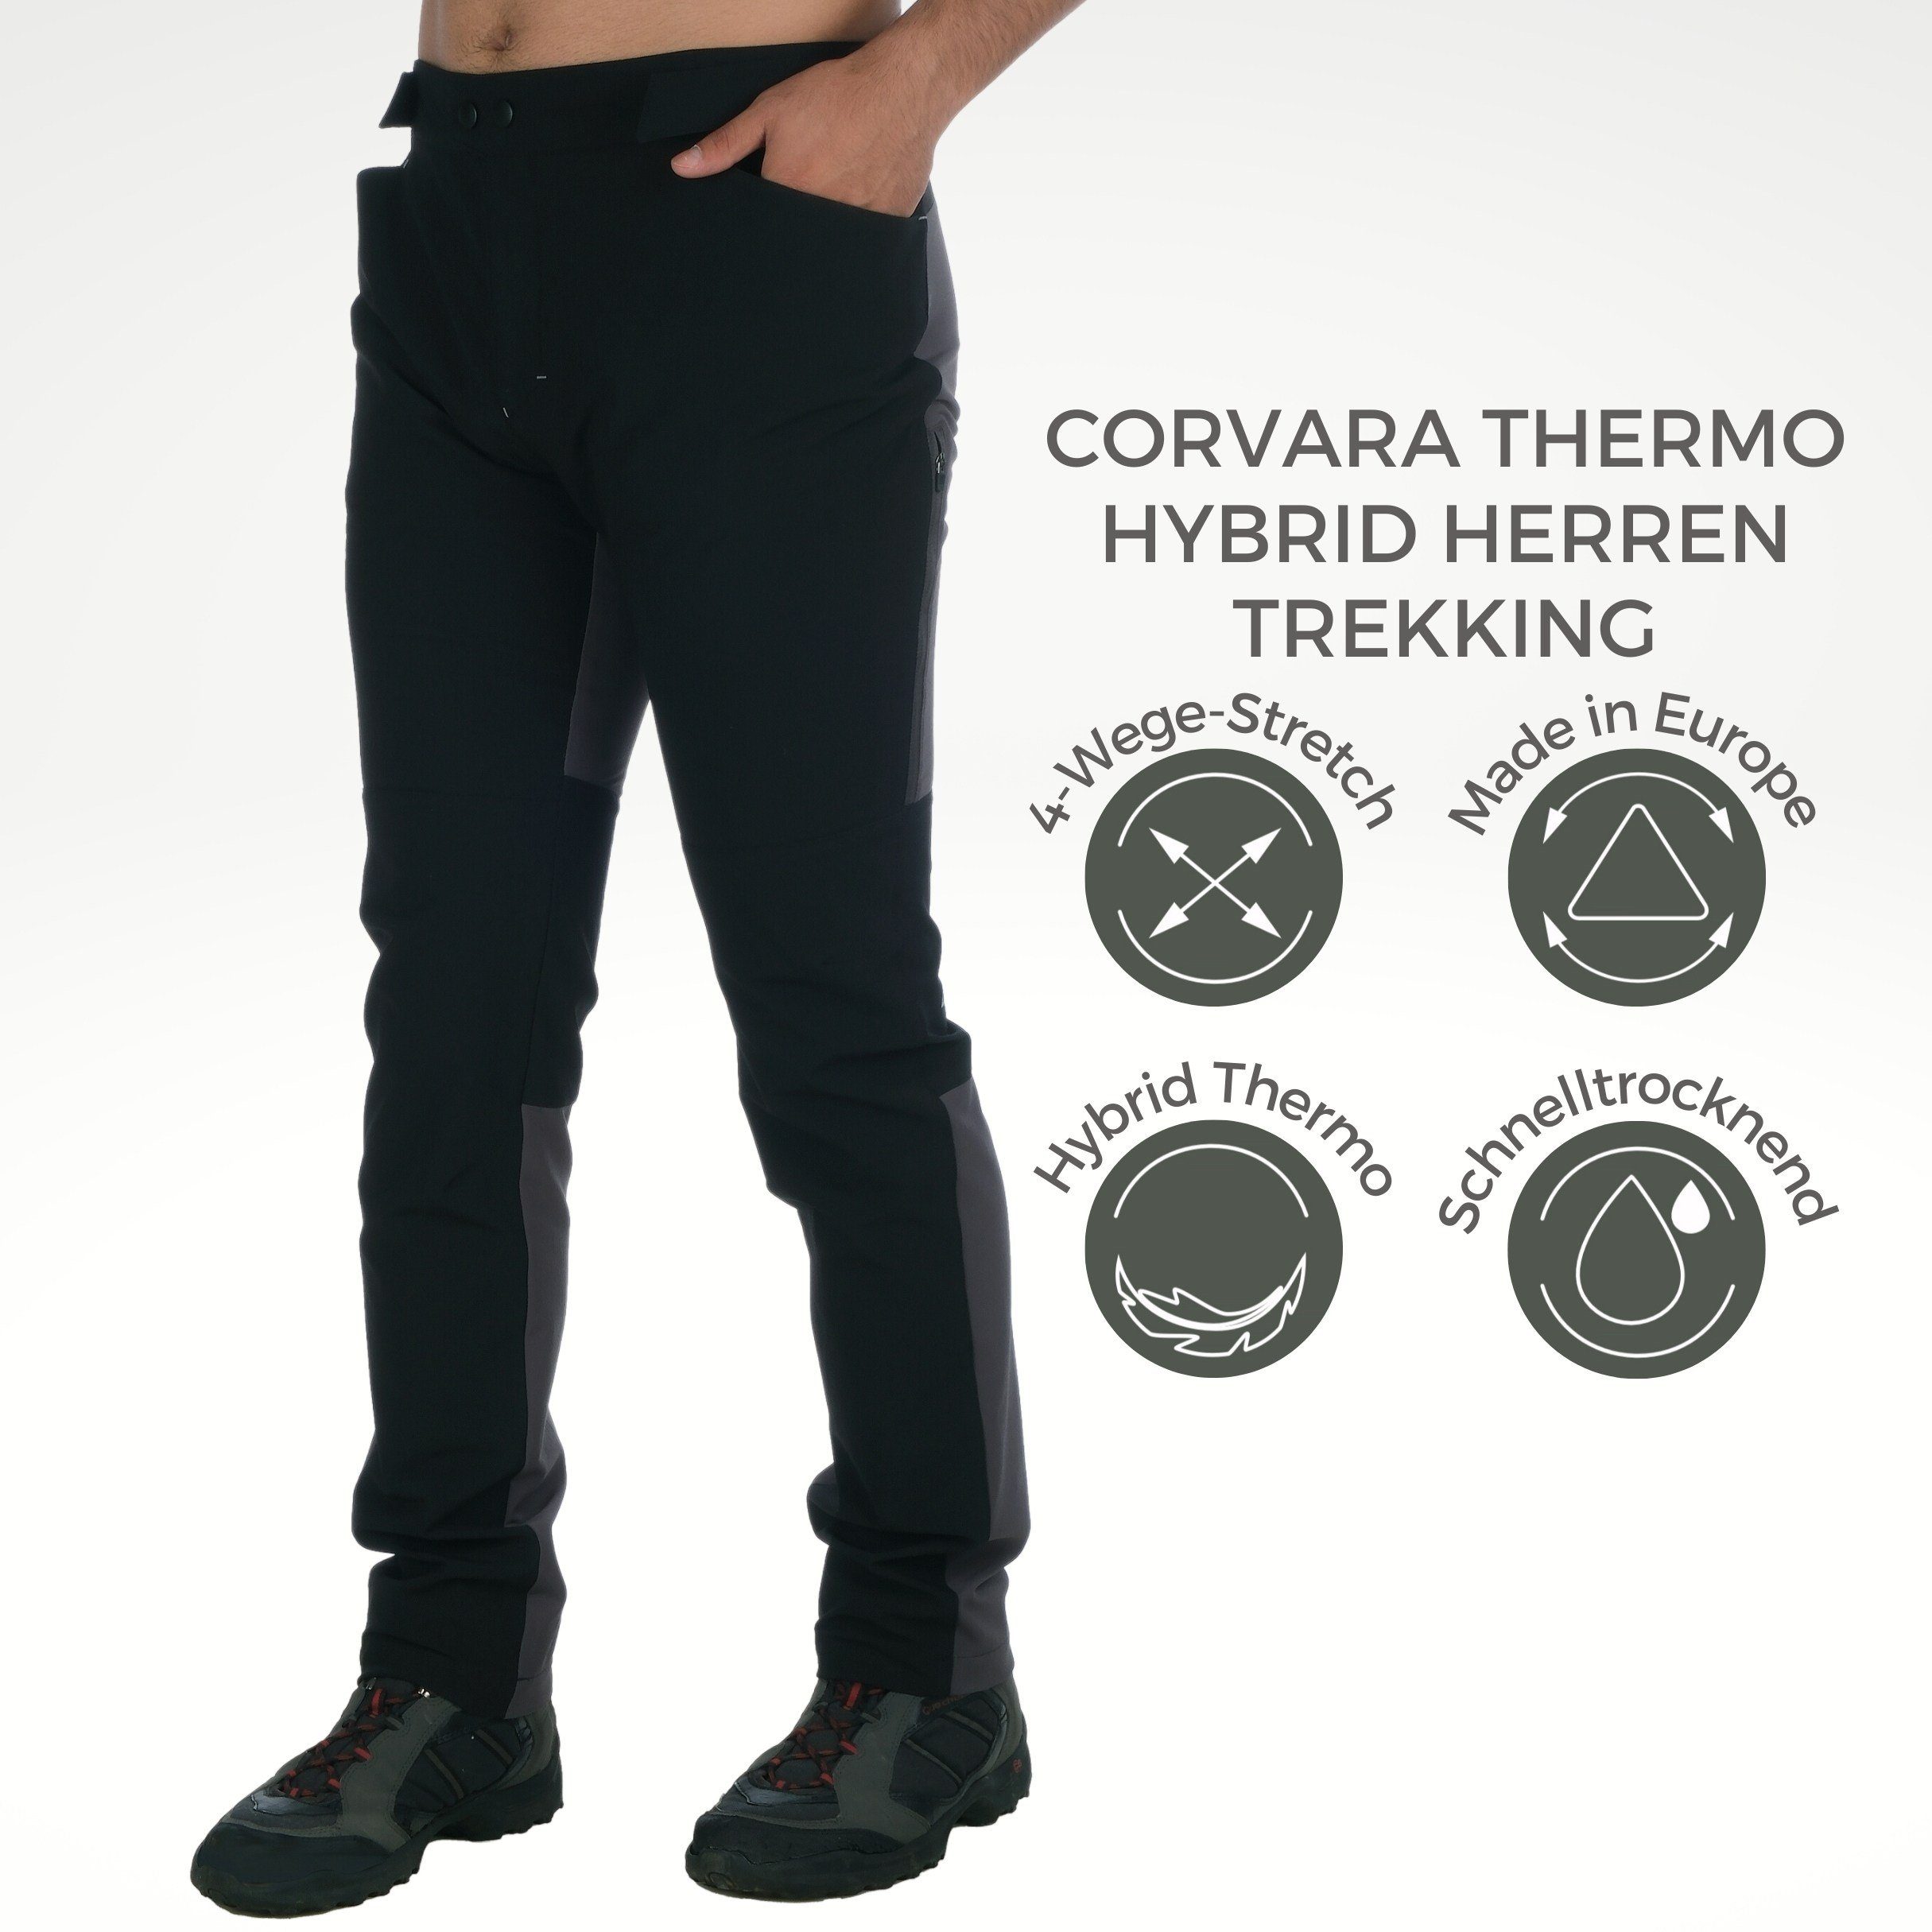 Herren Black Trekkinghose 50 Outdoor Winter Hose Thermo Kaymountain Hybrid Corvara Wander